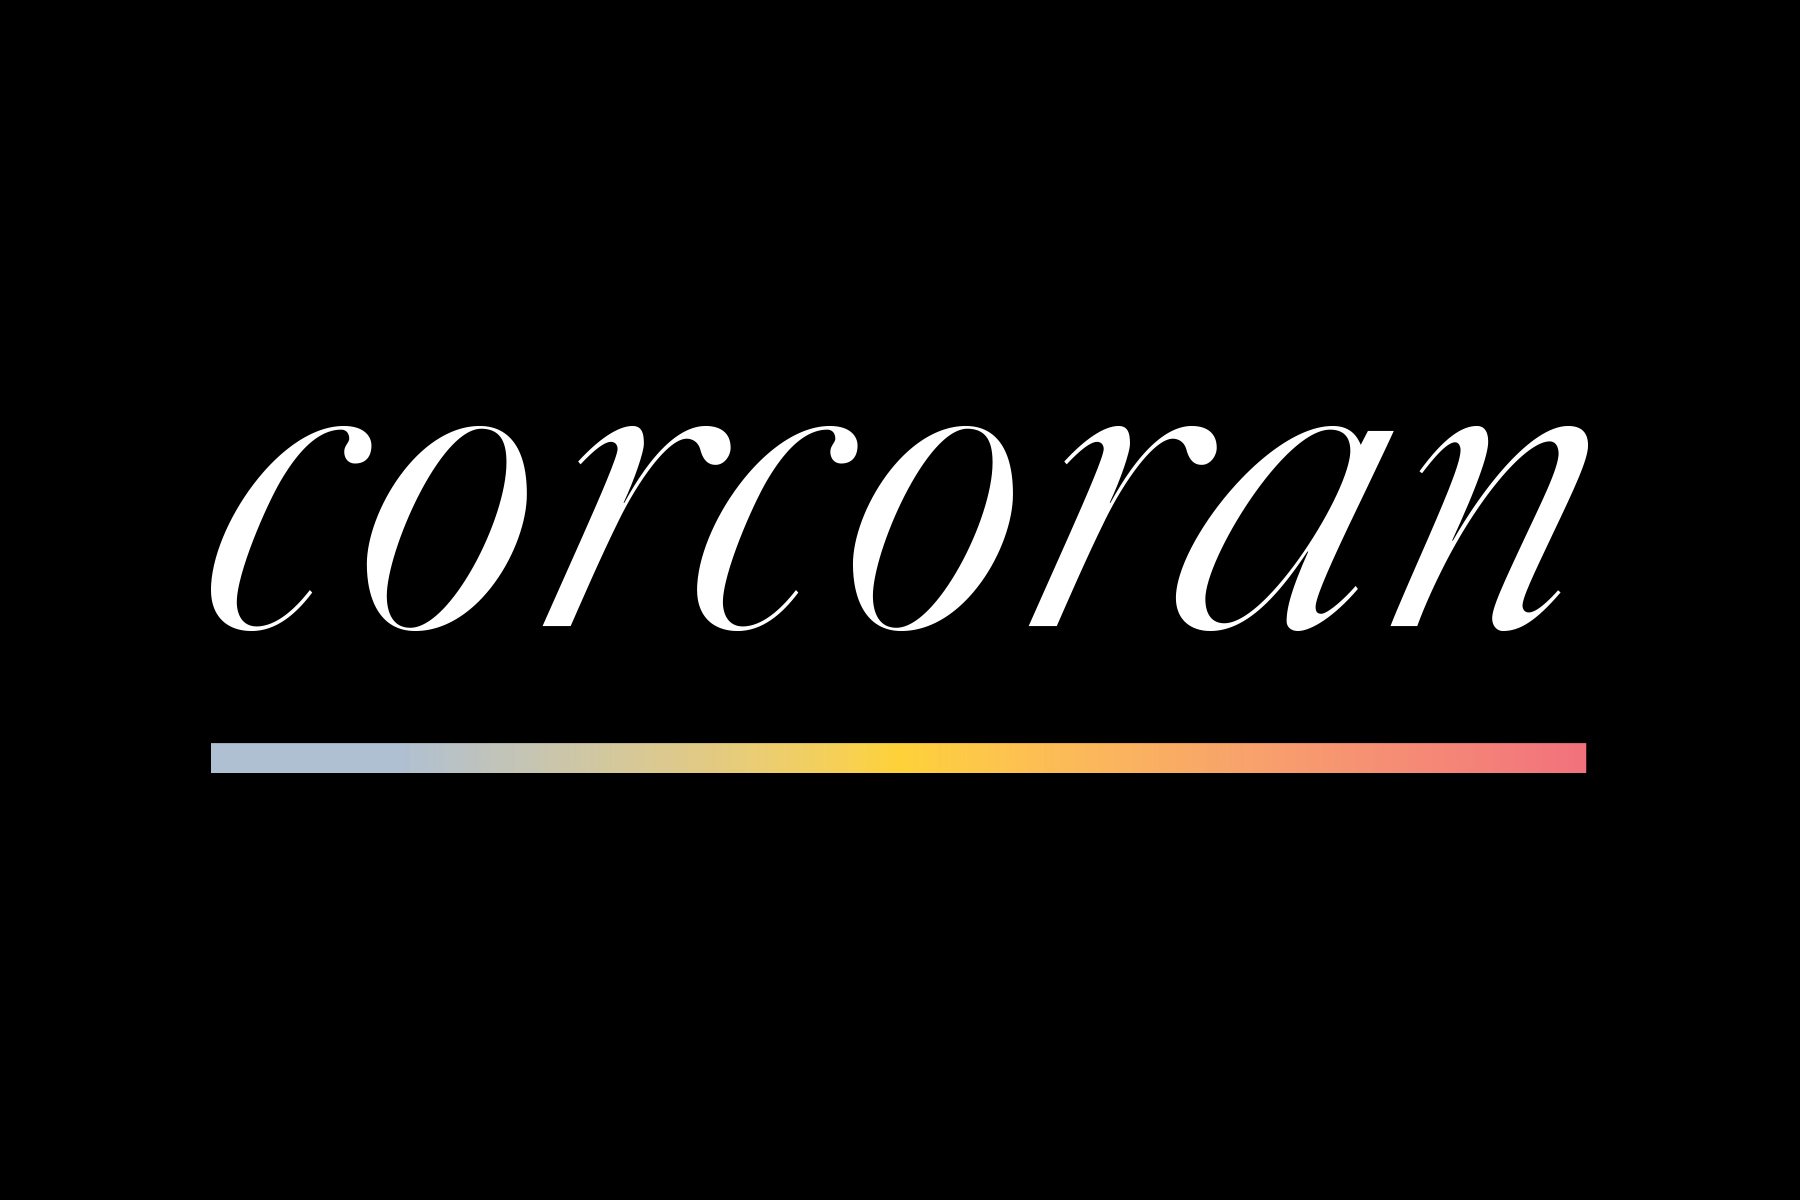 Trademark Logo CORCORAN